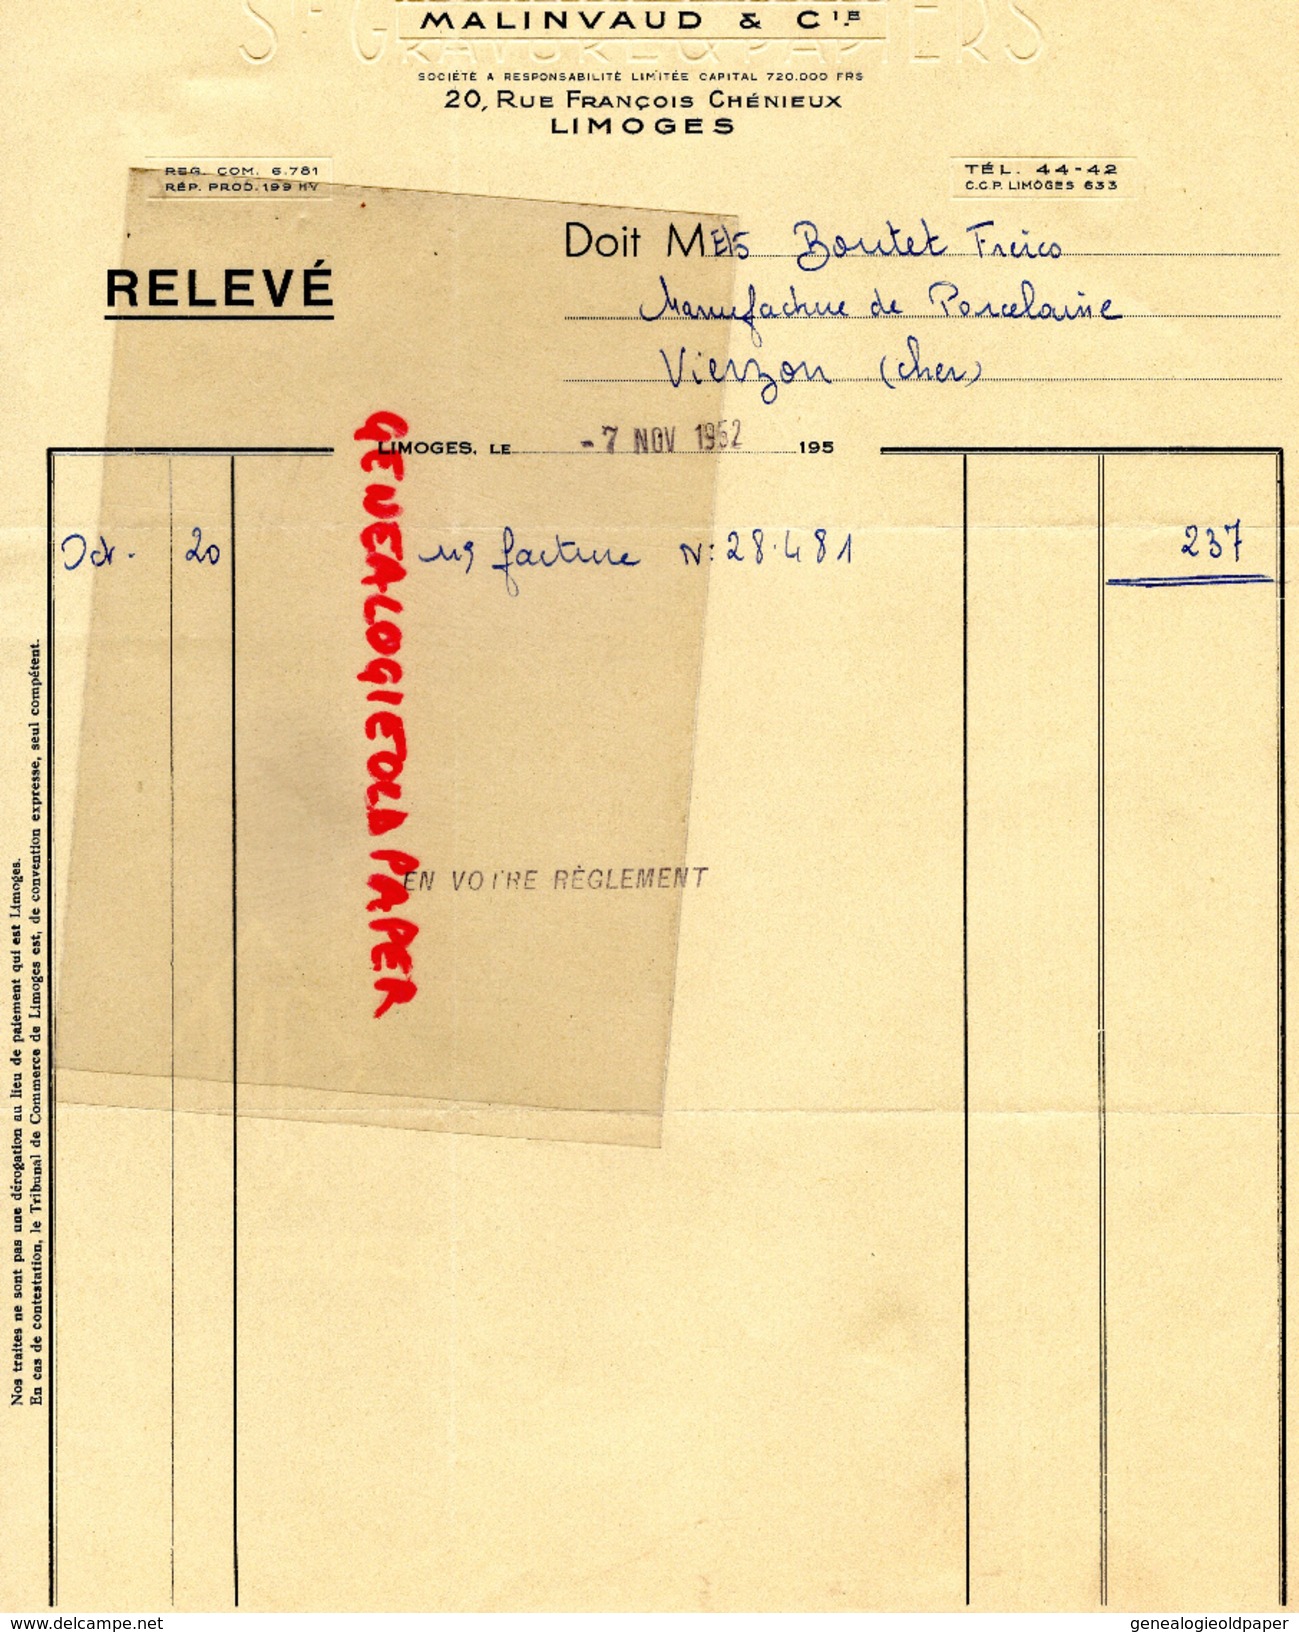 87 - LIMOGES - FACTURE MALINVAUD - IMPRIMERIE GRAVURE -20 RUE FRANCOIS CHENIEUX-1952 - Printing & Stationeries